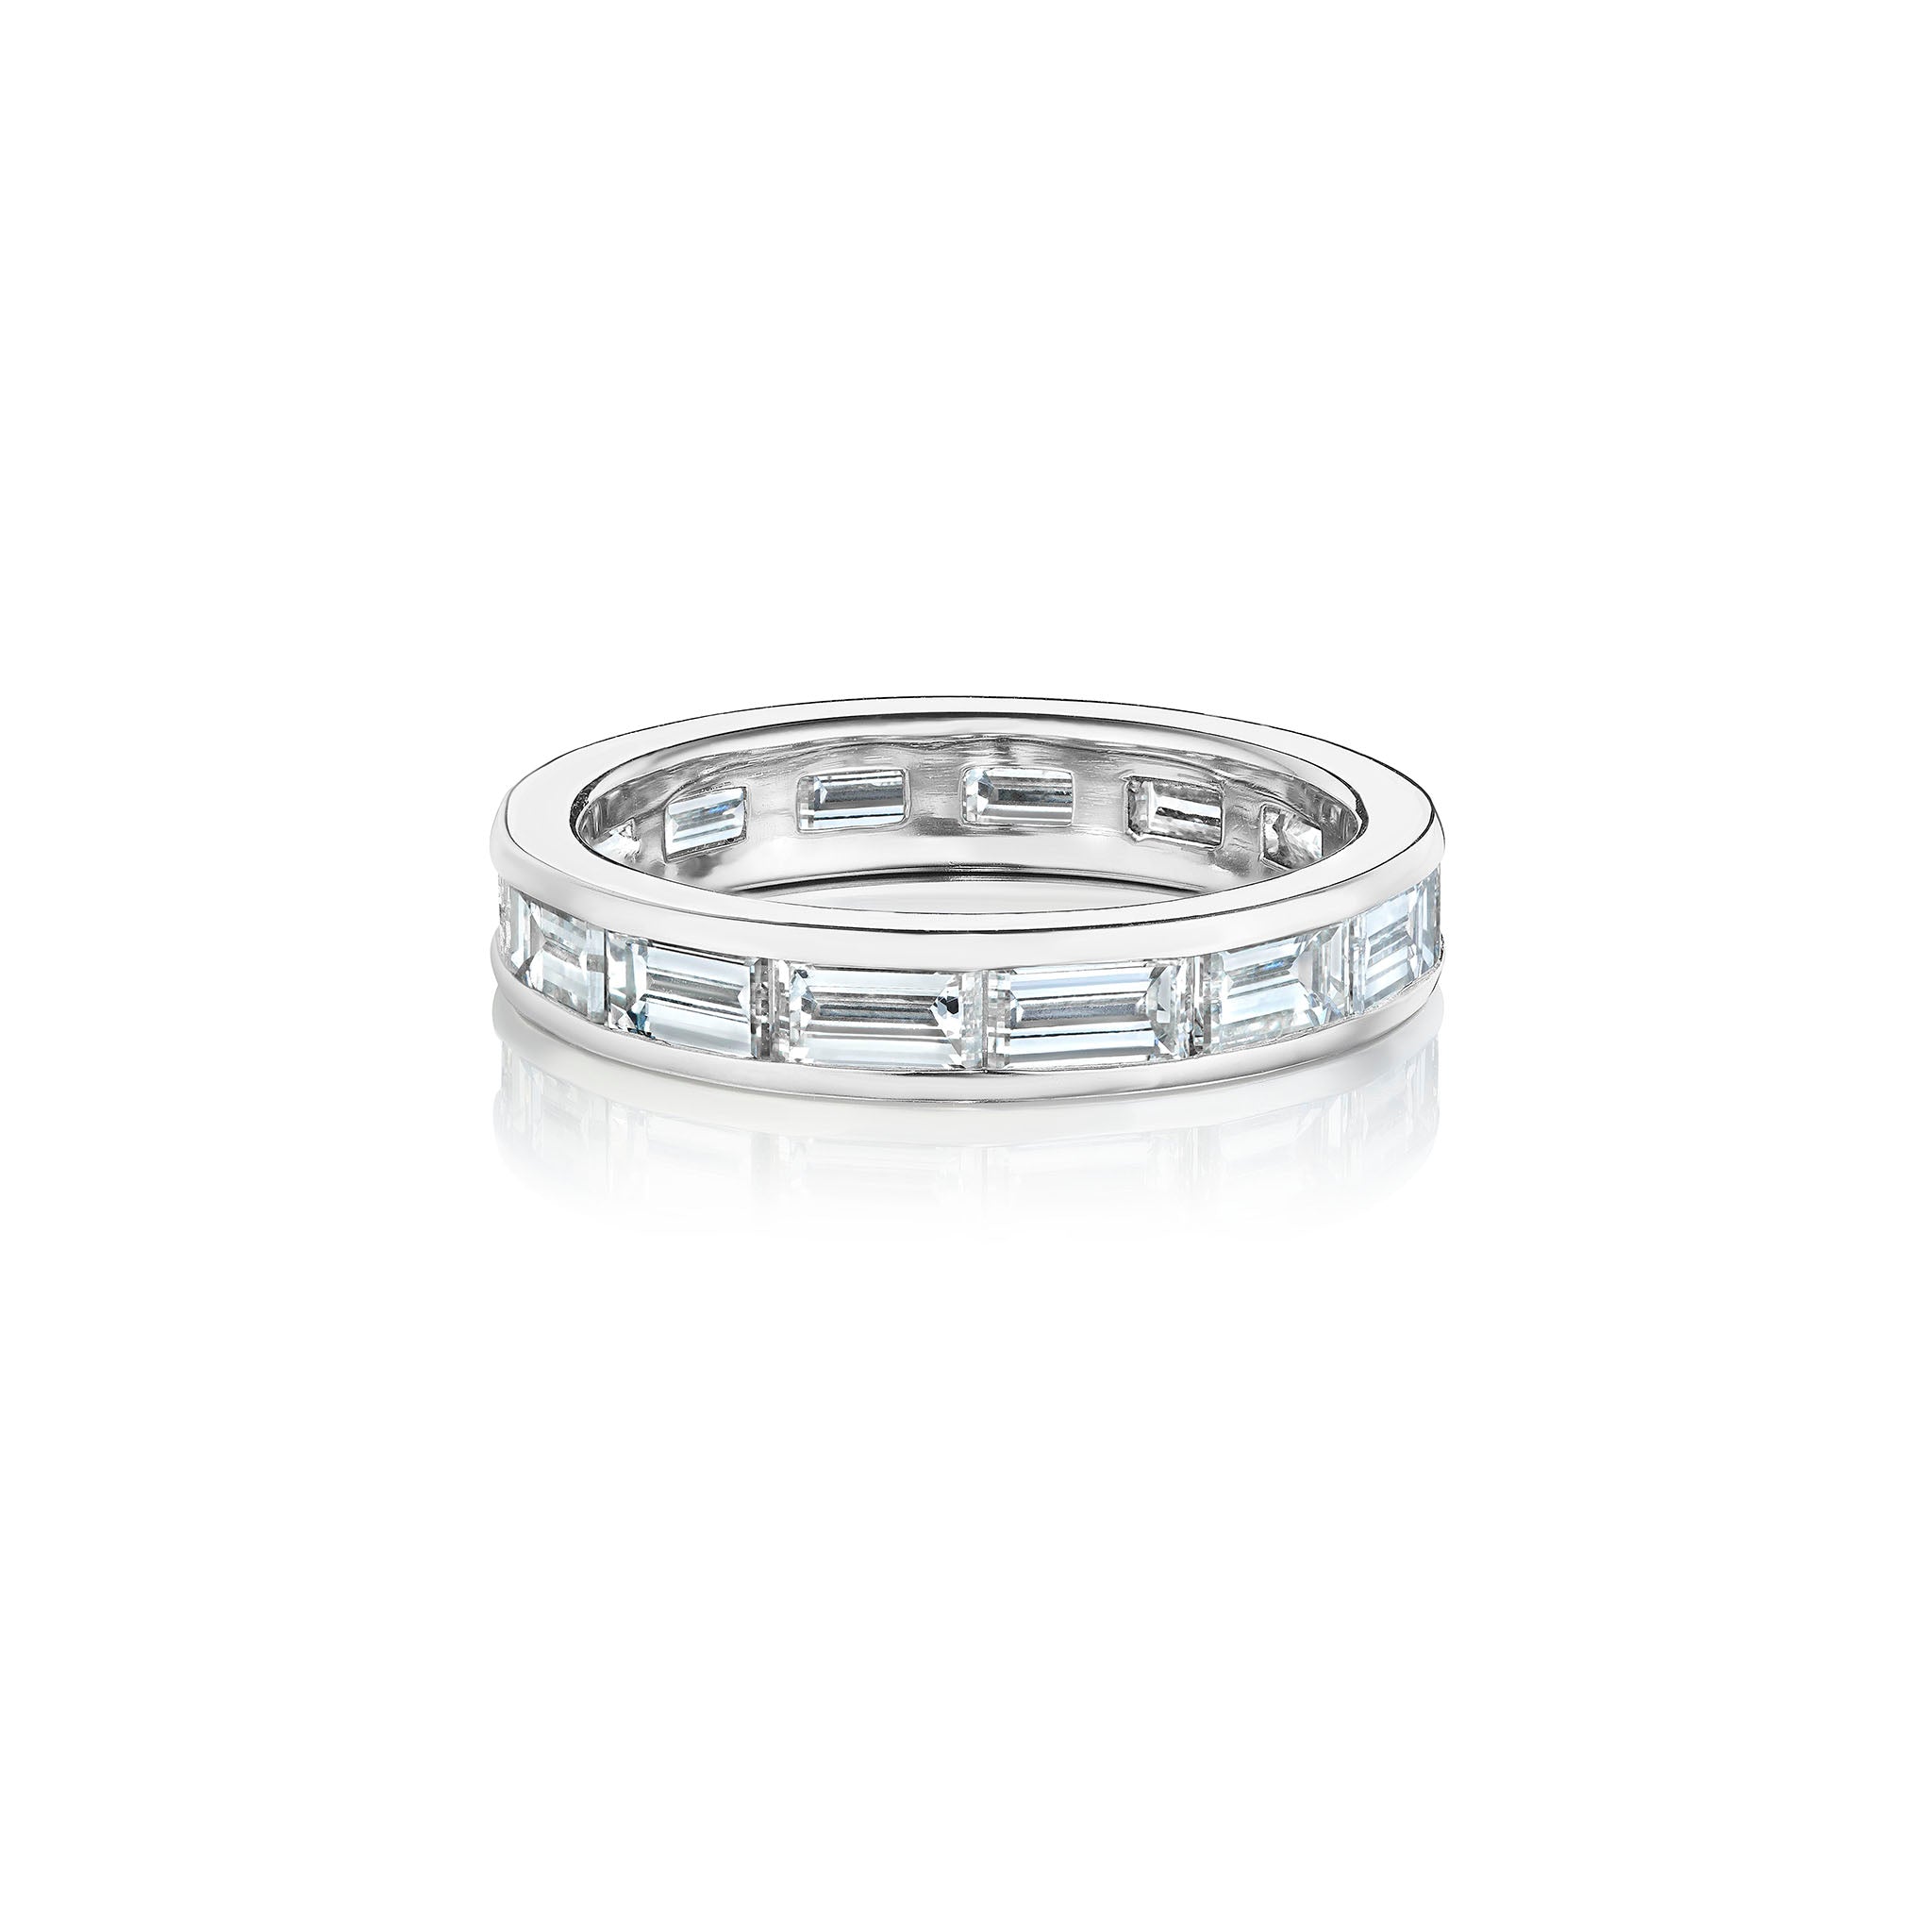 2 carat Custom Chanel Set Baguette Ring